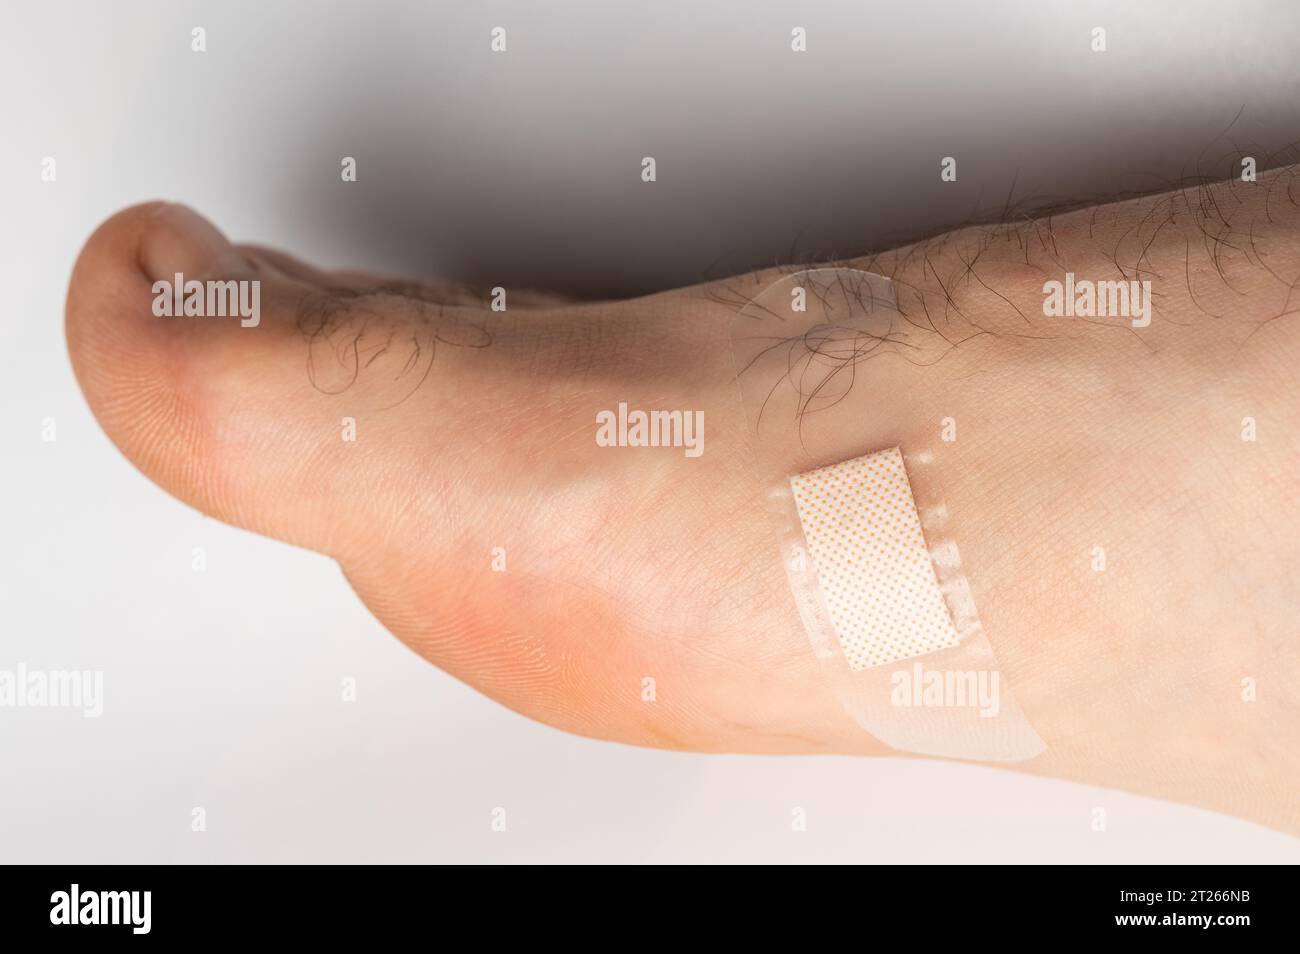 Intonaco adesivo sul piede umano vista ravvicinata macro Foto Stock